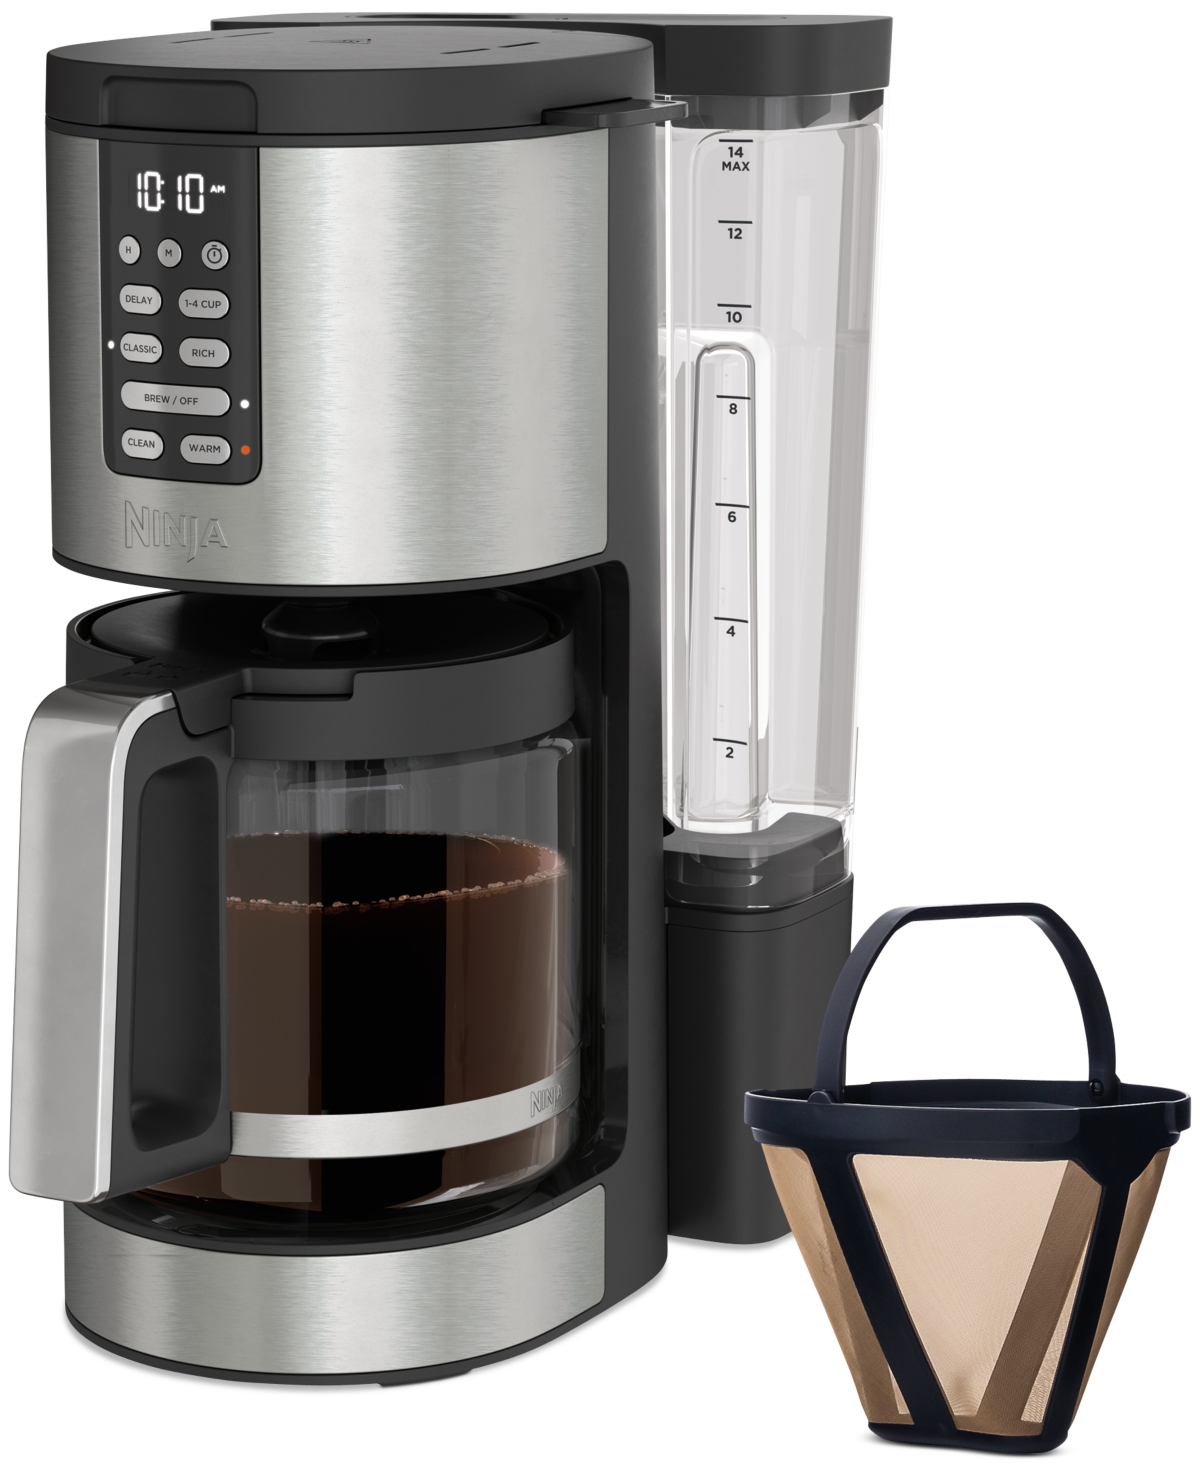 Ninja Dcm201 Programmable Xl 14-cup Coffee Maker Pro In Metallic